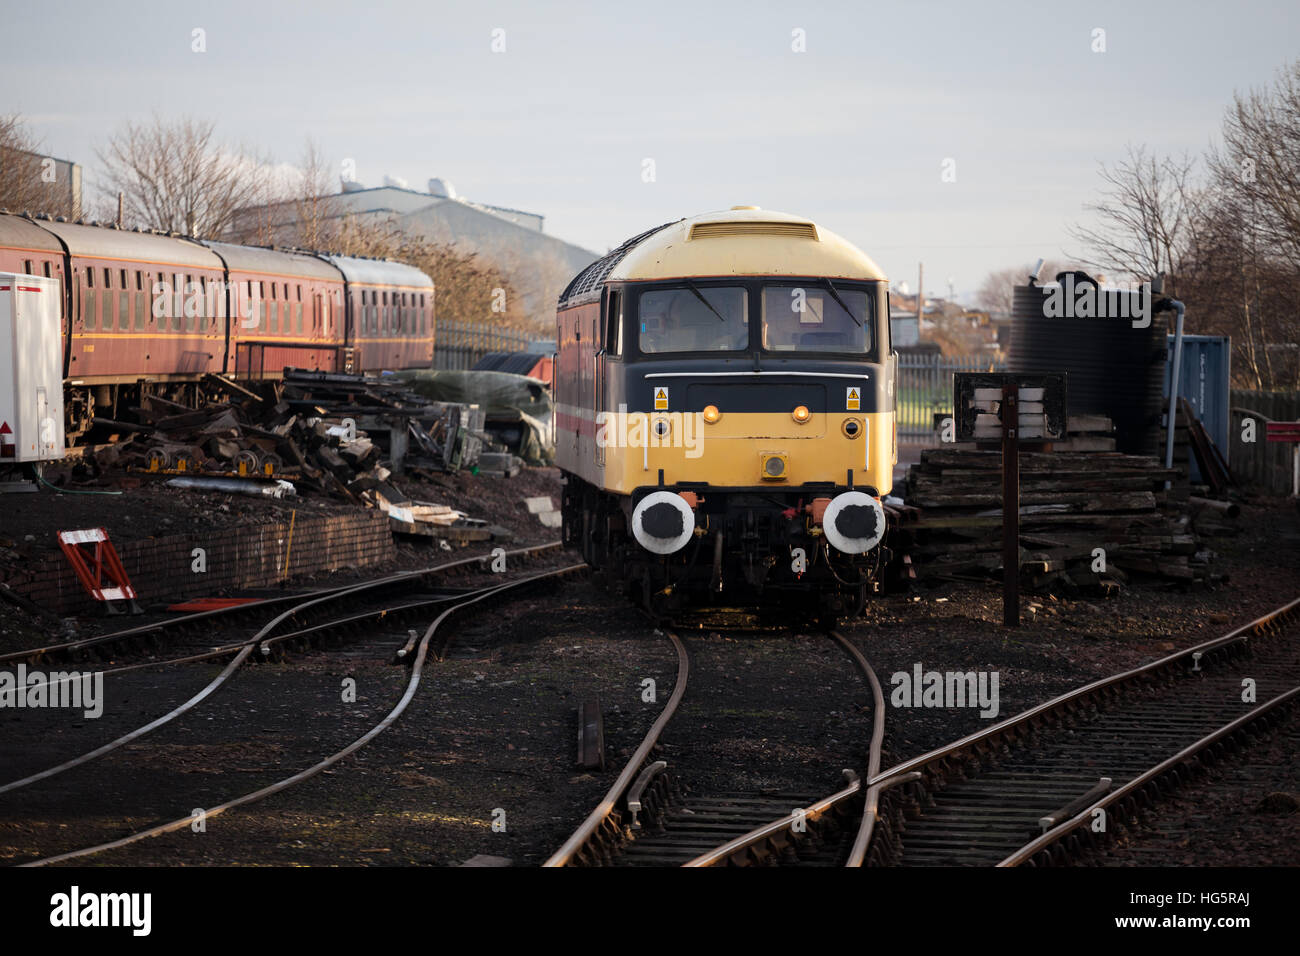 A class 47 british diesel locomotive Stock Photo